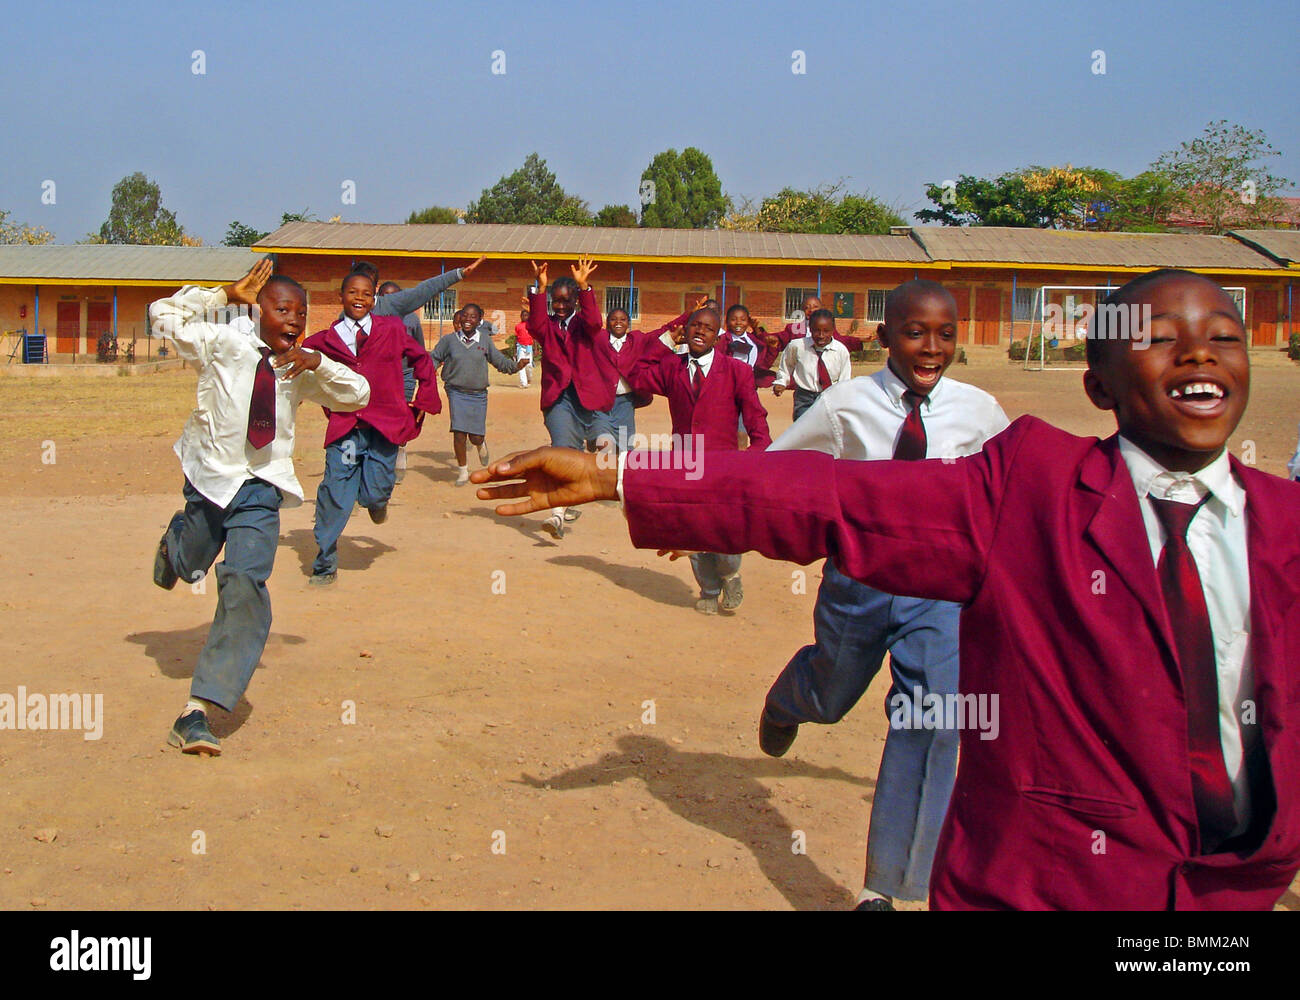 Nigeria, Jos, Schoolboys and schoolgirls in their purple and blue school uniform, running alltogether on a sandy field. Stock Photo